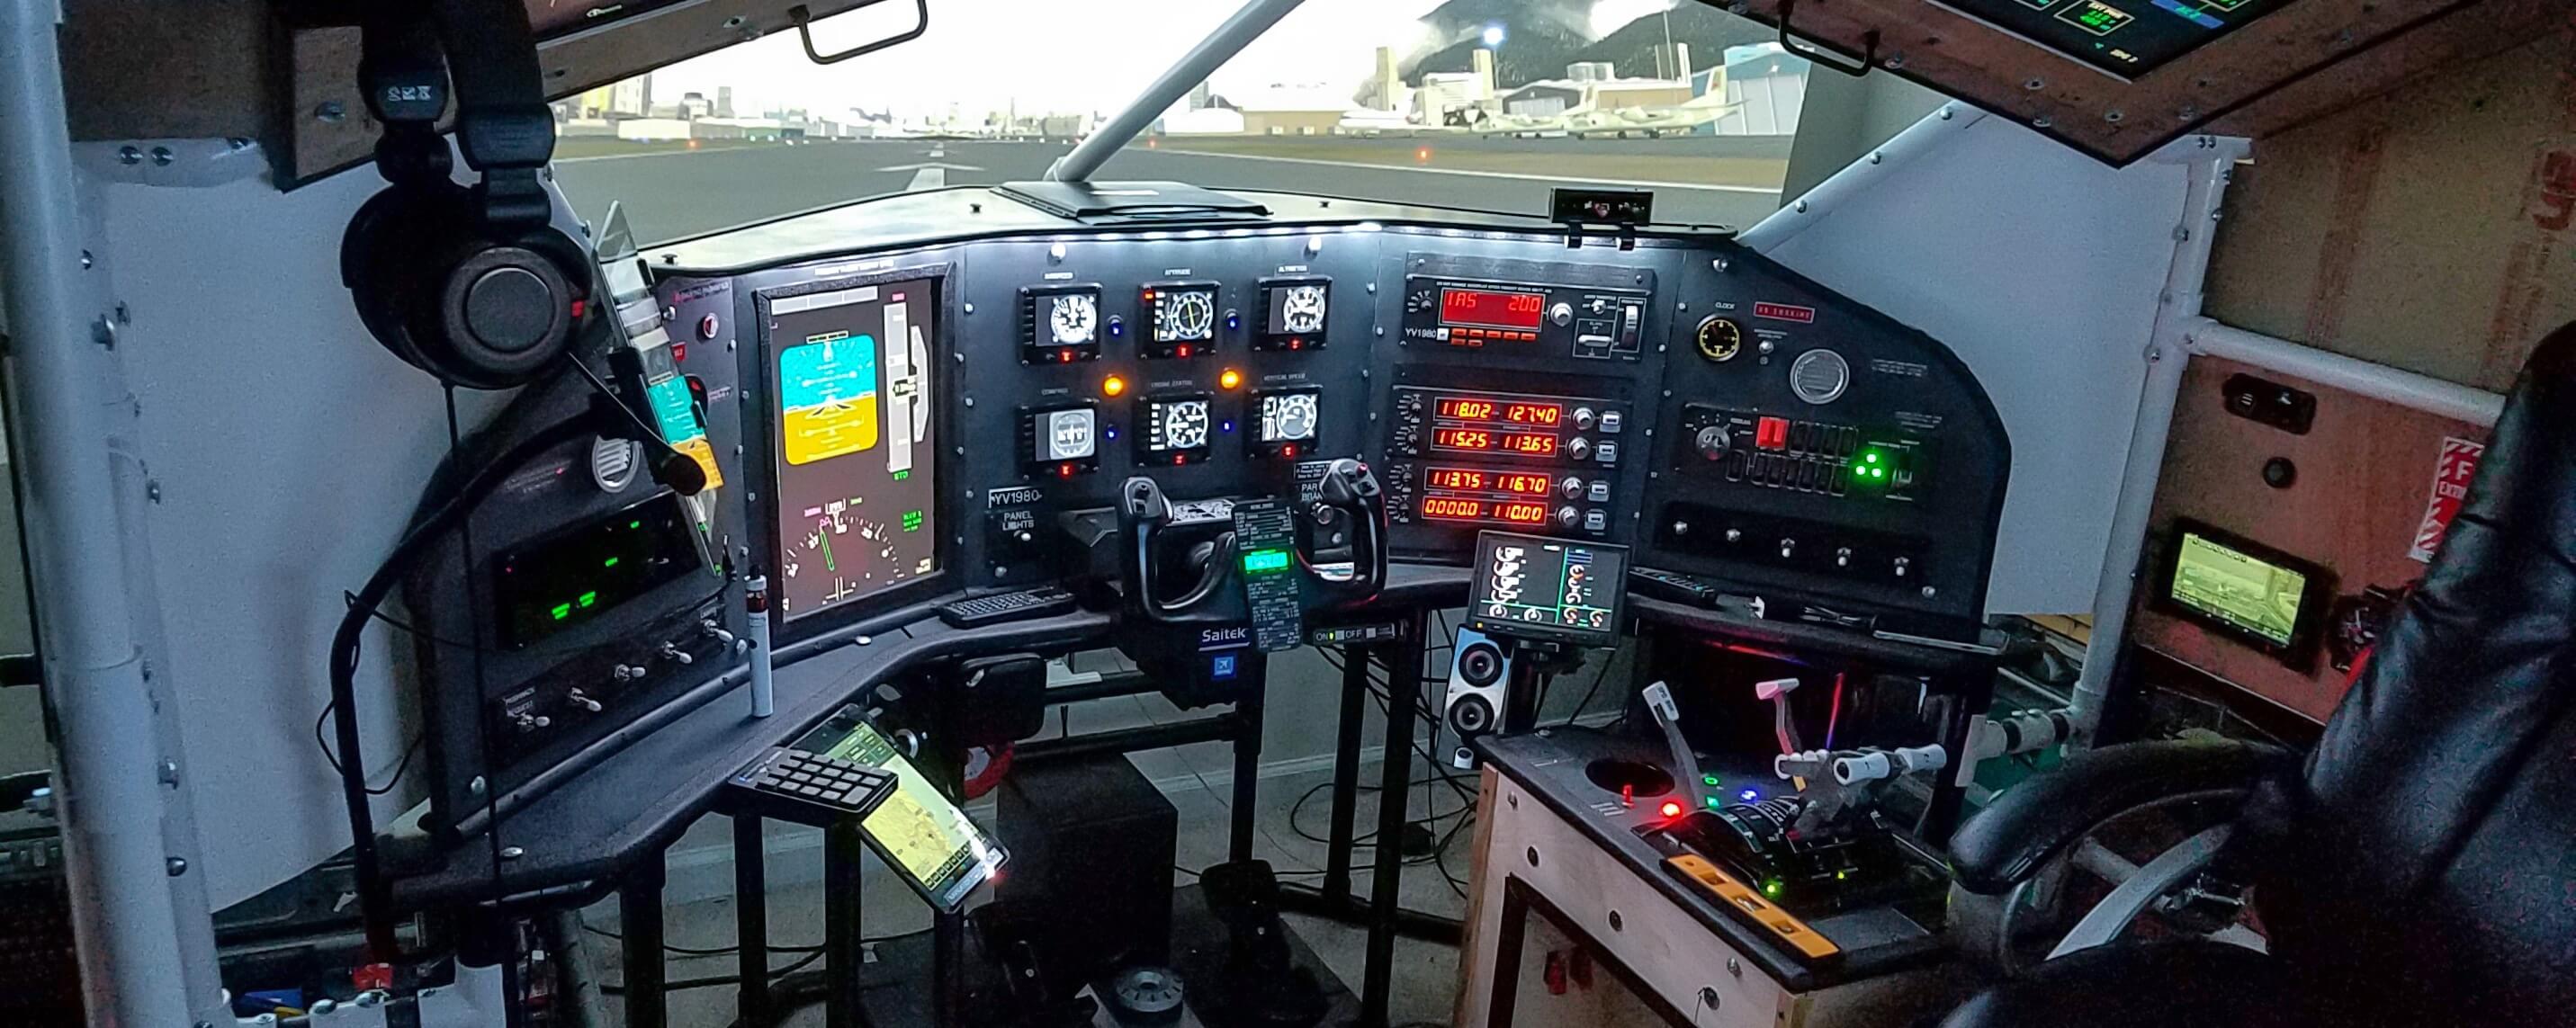 diy flight sim cockpit